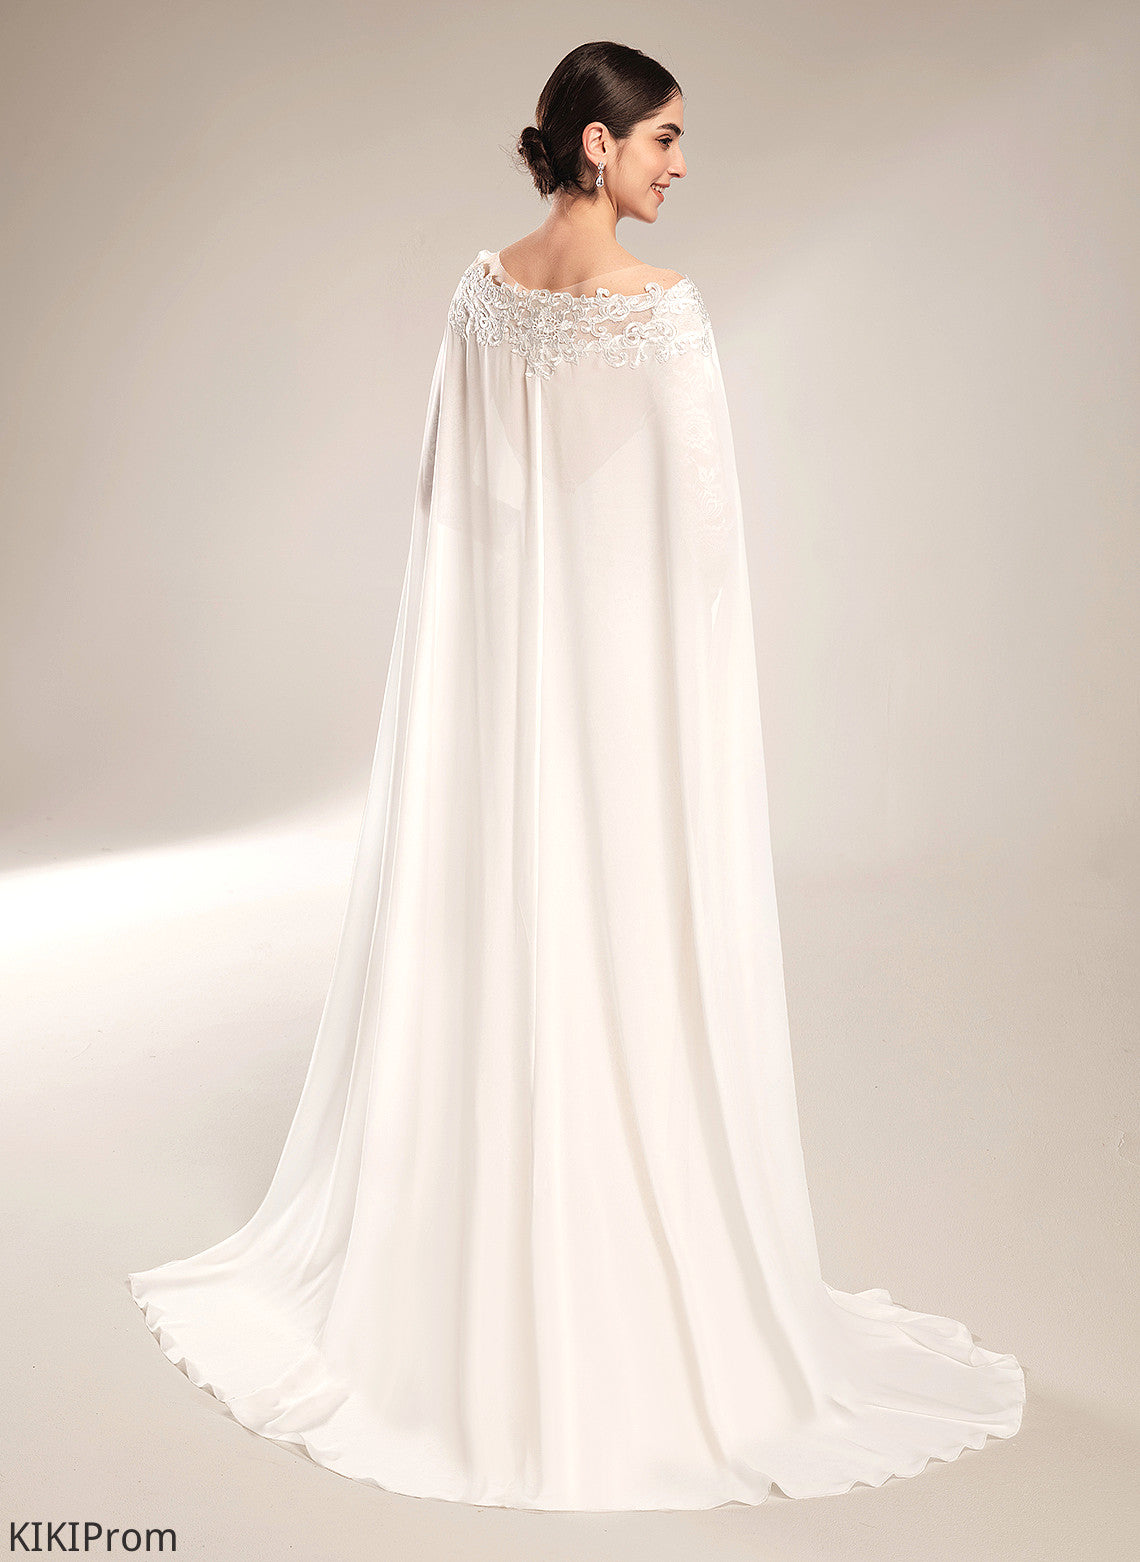 Court Beading Trumpet/Mermaid Wedding Dresses With Chiffon Lace Dress Illusion Wedding Train Ayana